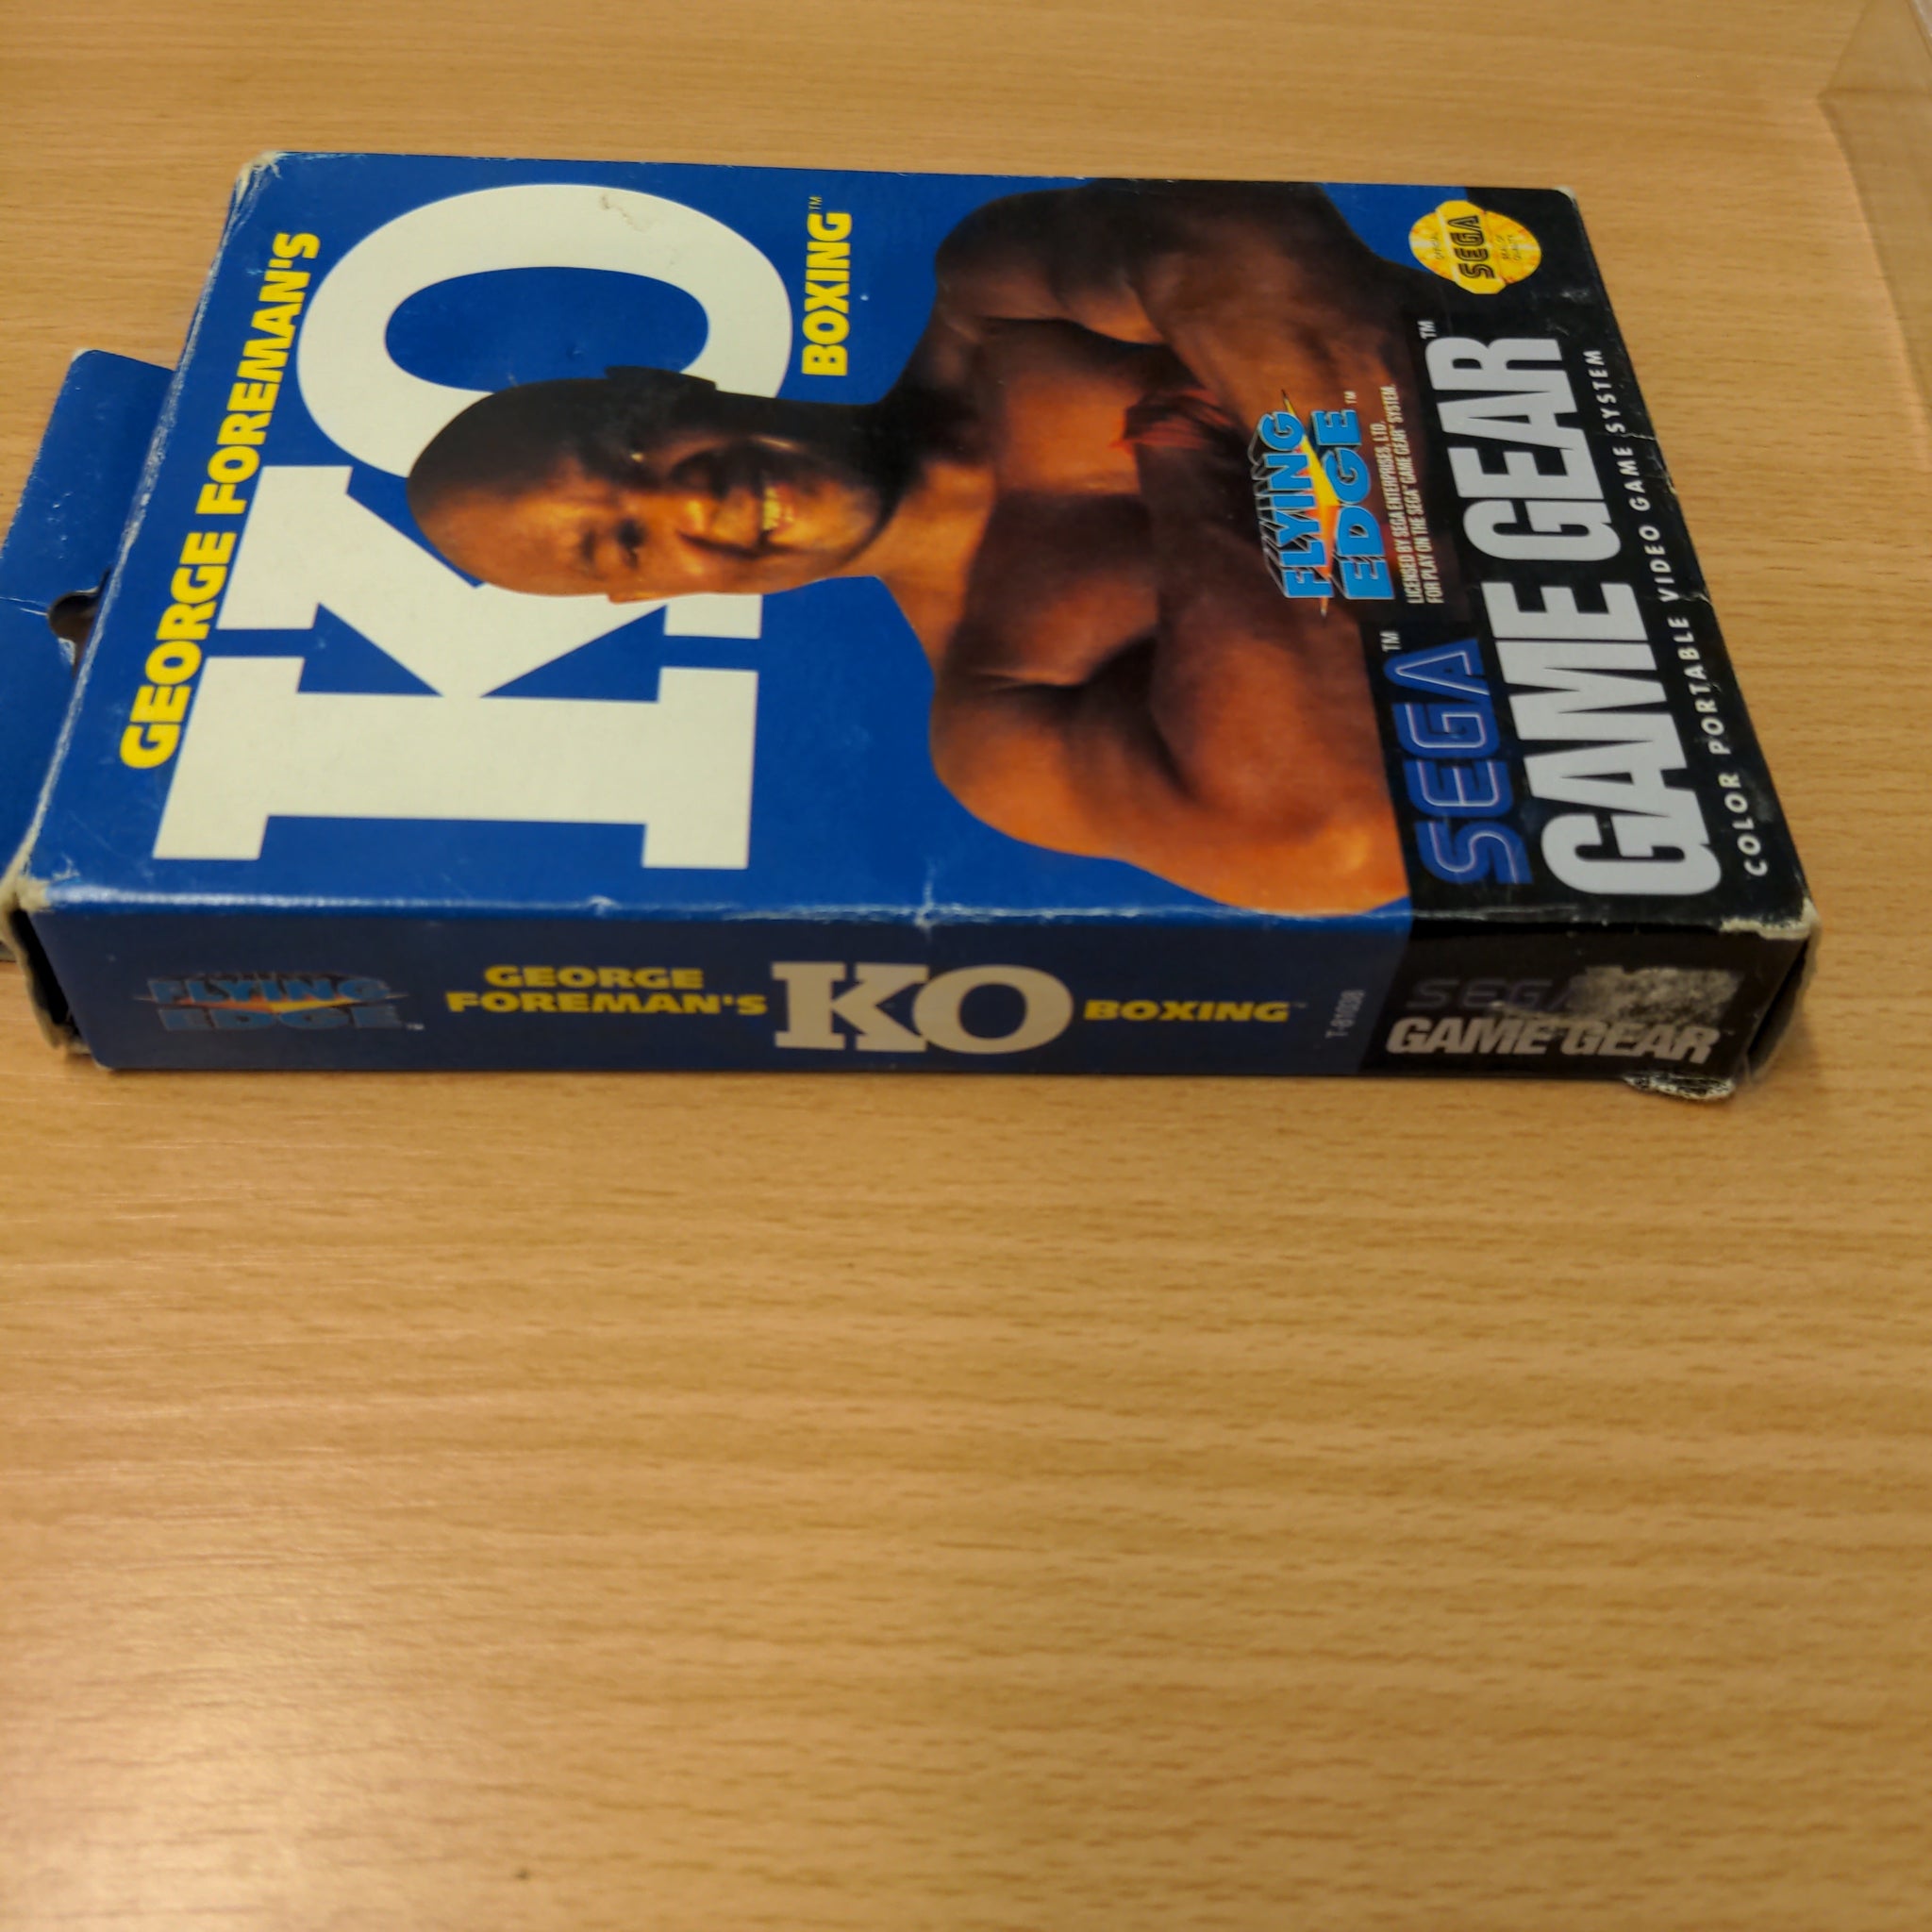 George Foreman KO Boxing Sega Game Gear game NTSC